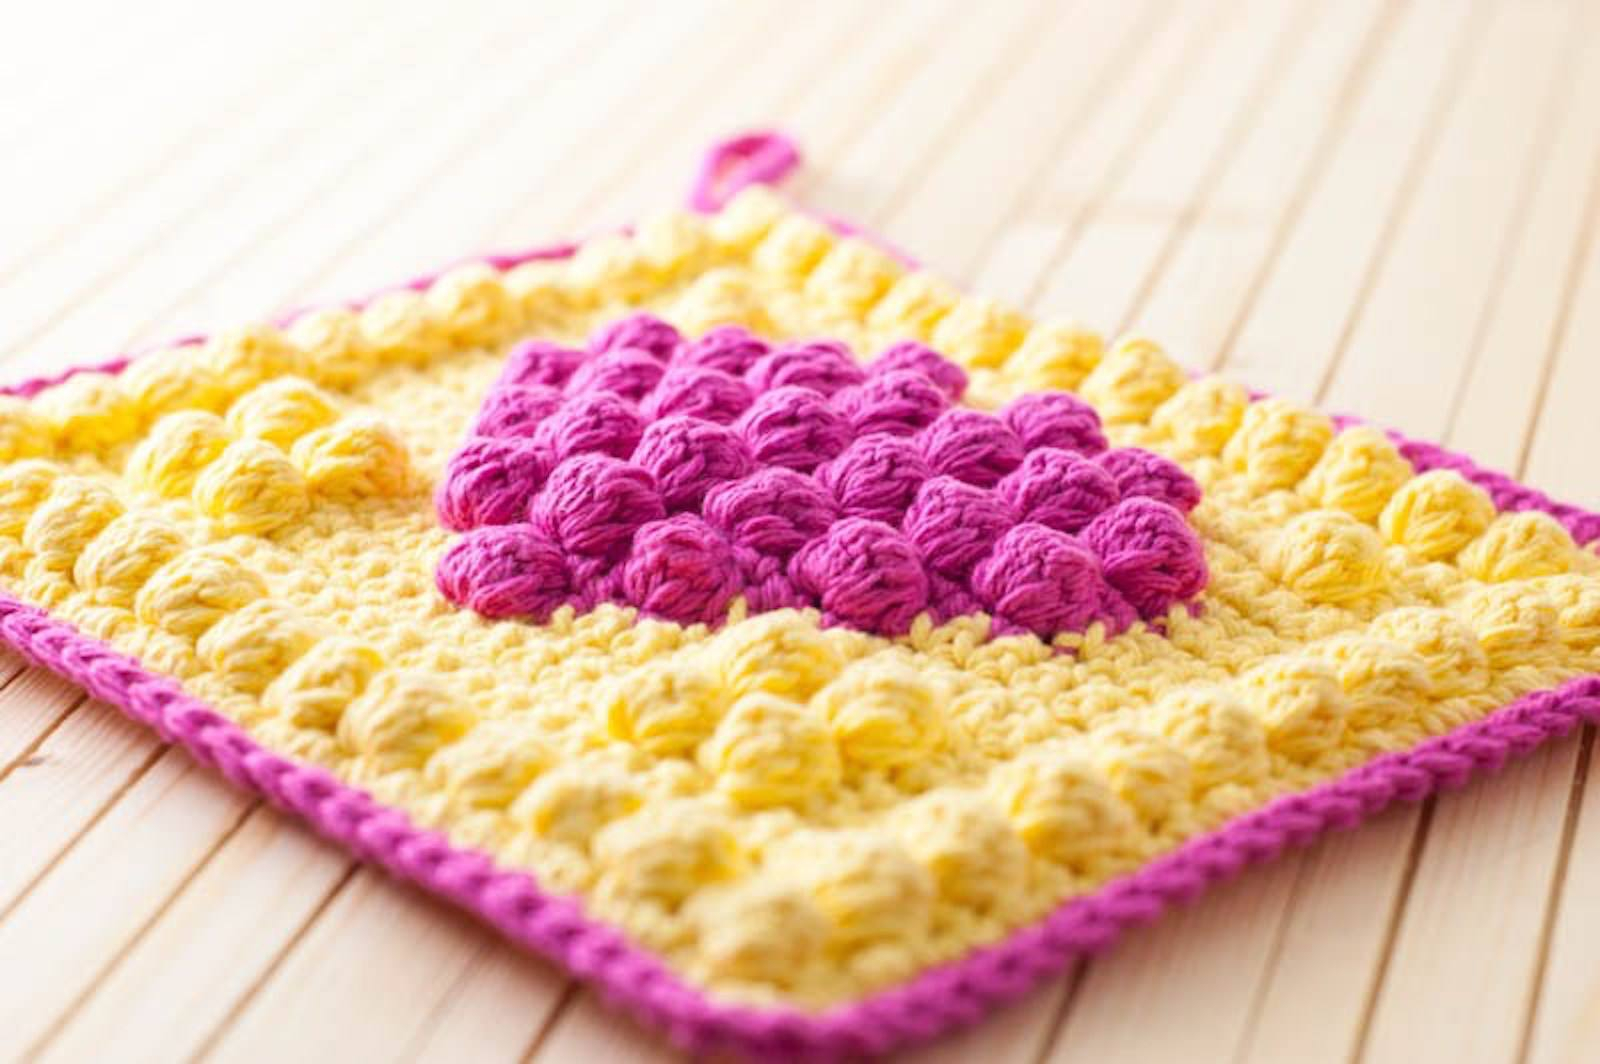 Free Crochet Potholder Patterns 7 Free Crochet Potholder Patterns